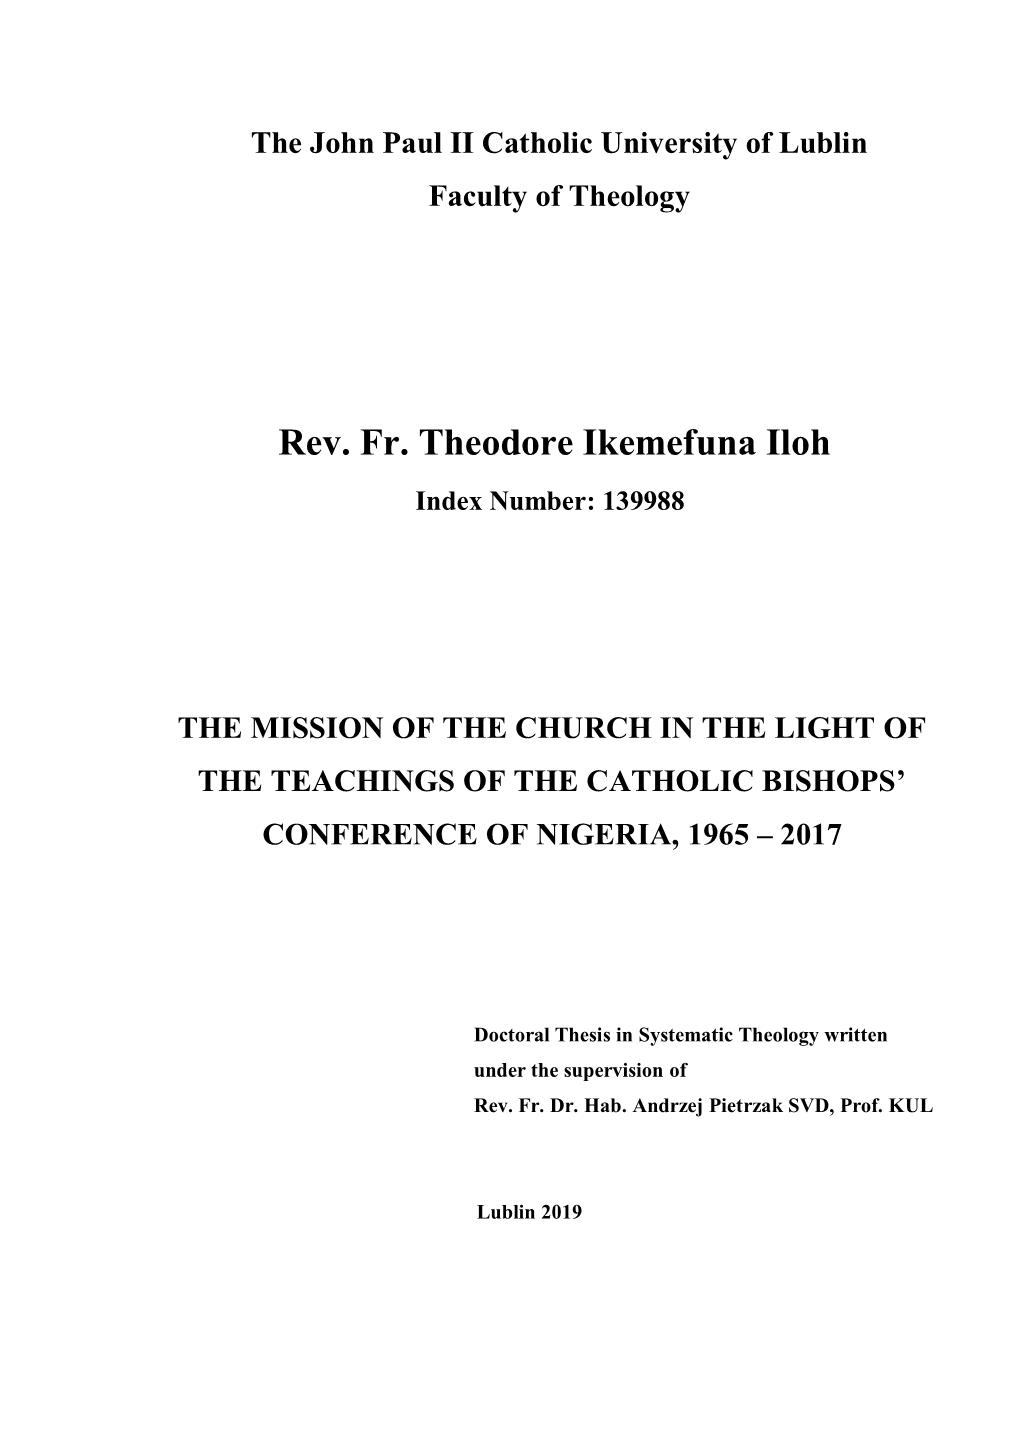 Rev. Fr. Theodore Ikemefuna Iloh